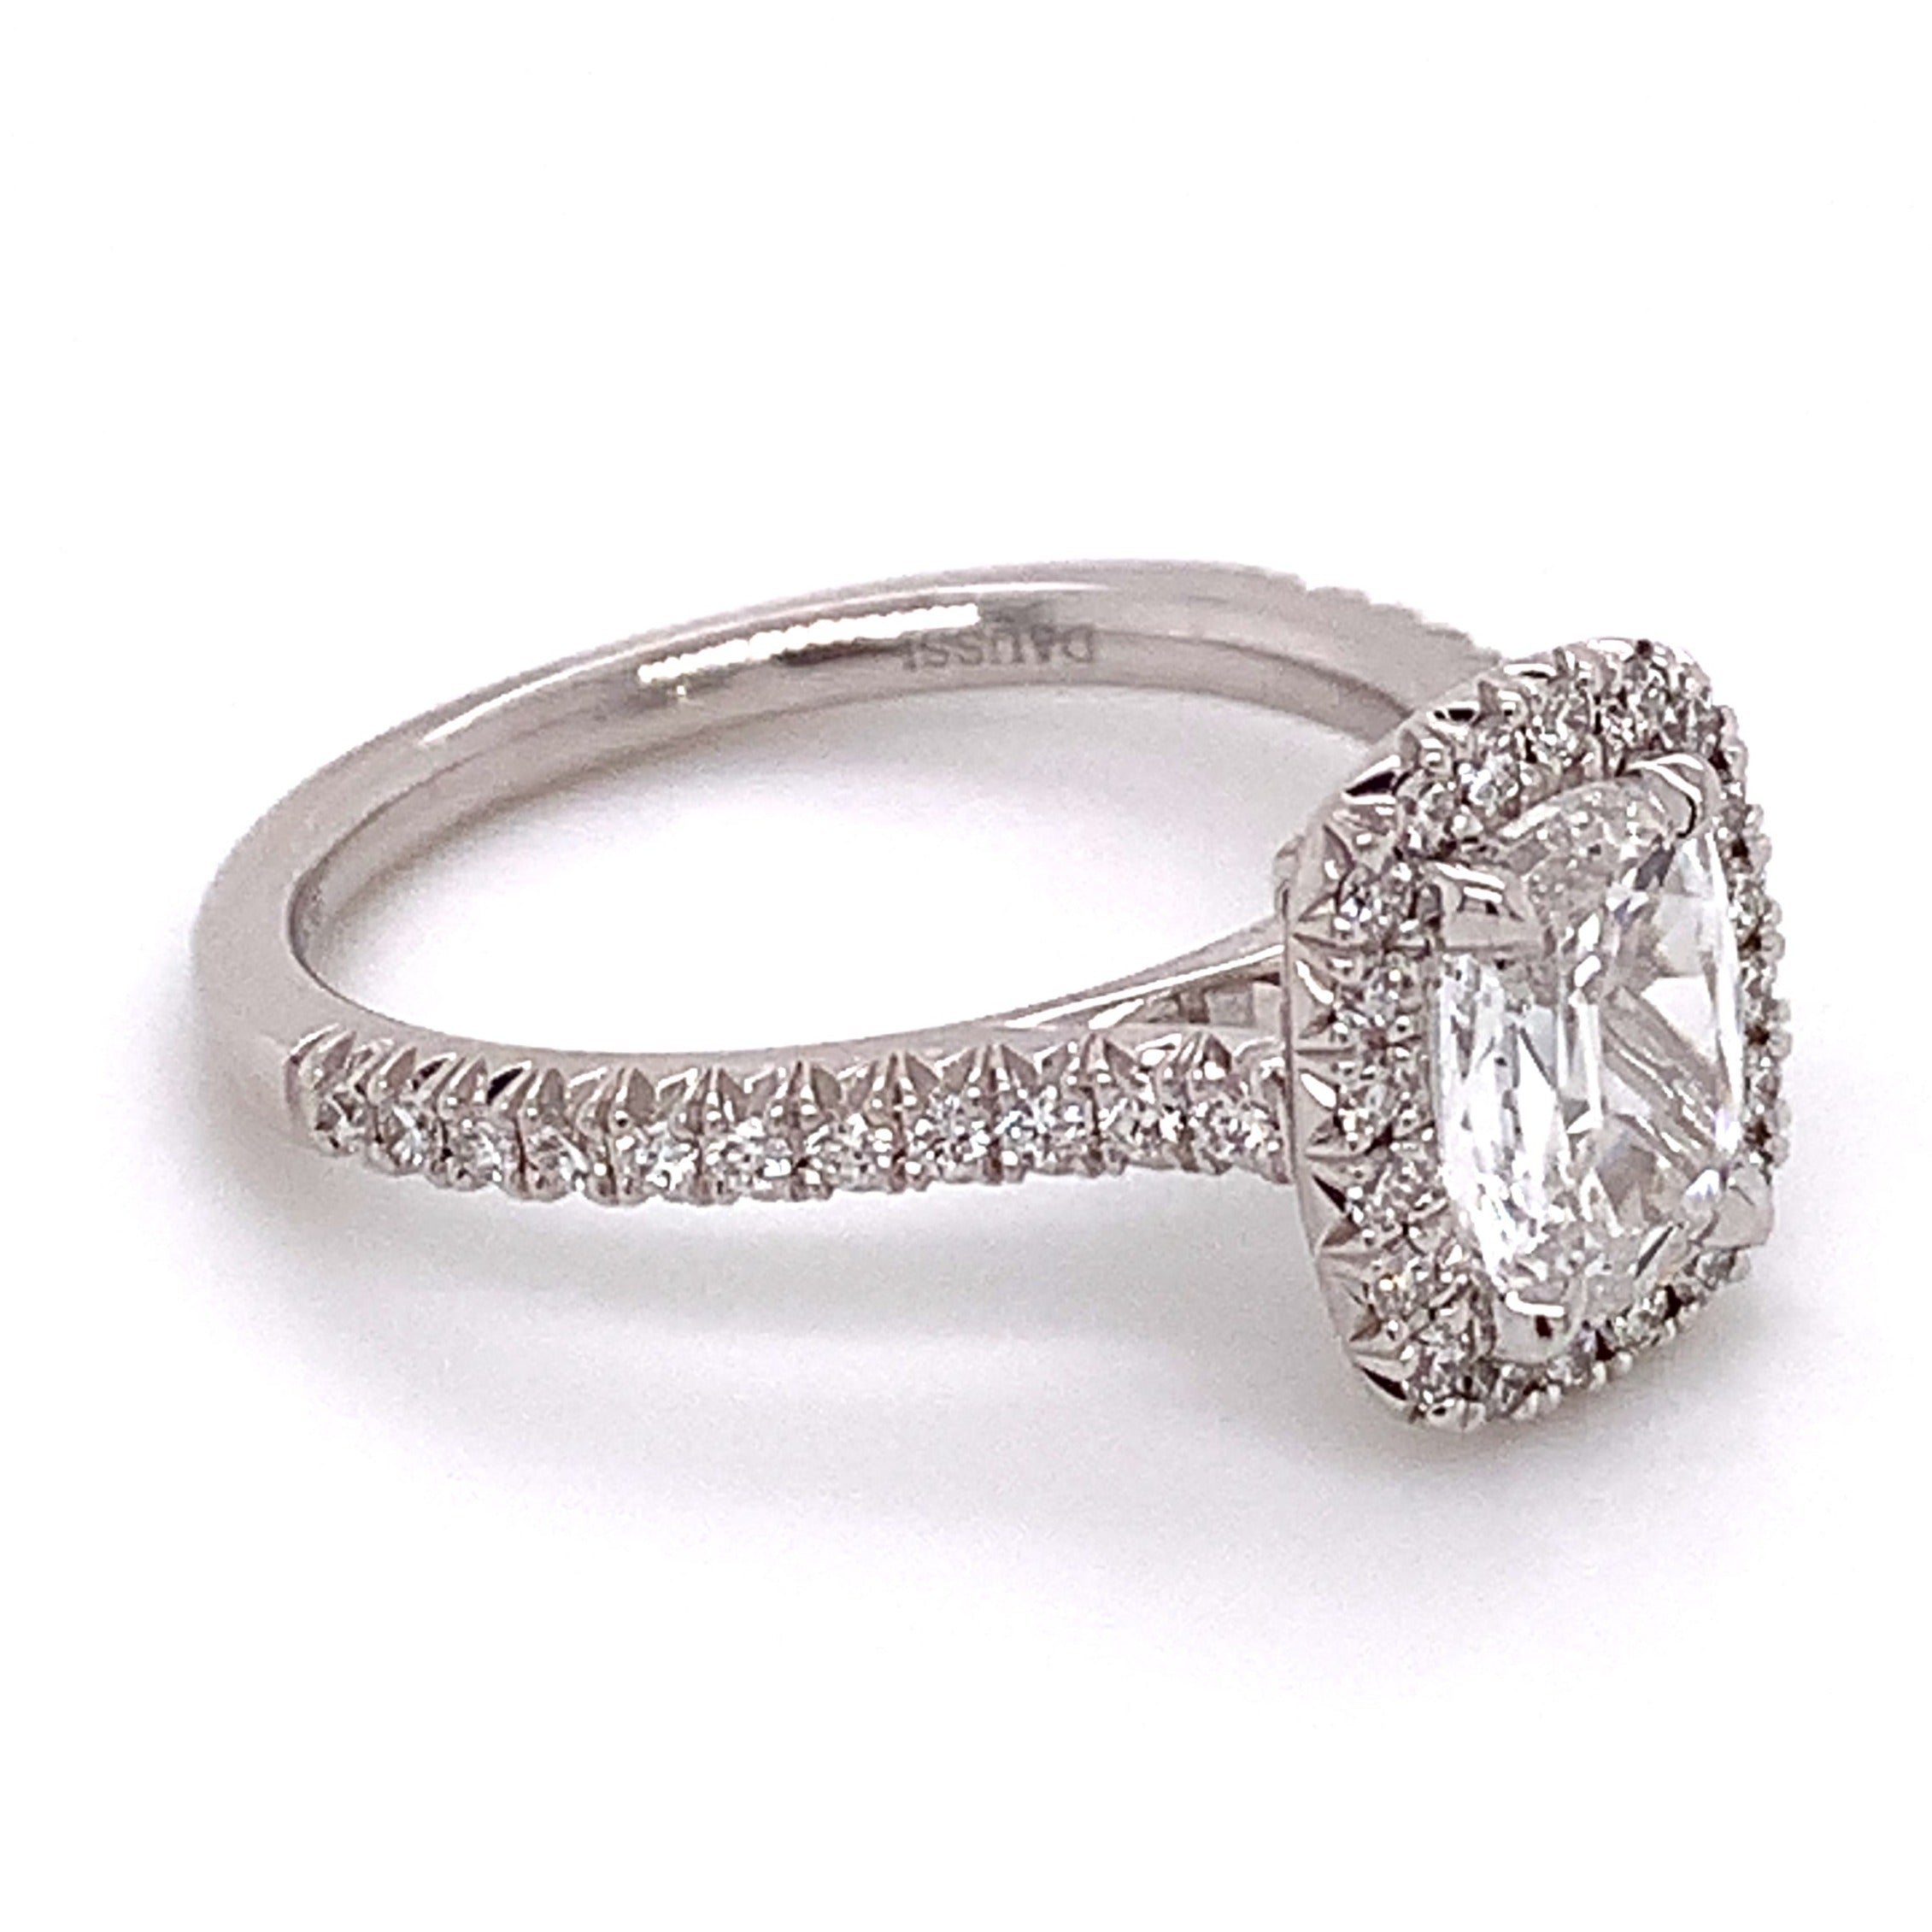 GIA Certified Henri Daussi 1.23ct tw Cushion Halo Diamond Engagement Anniversary Ring